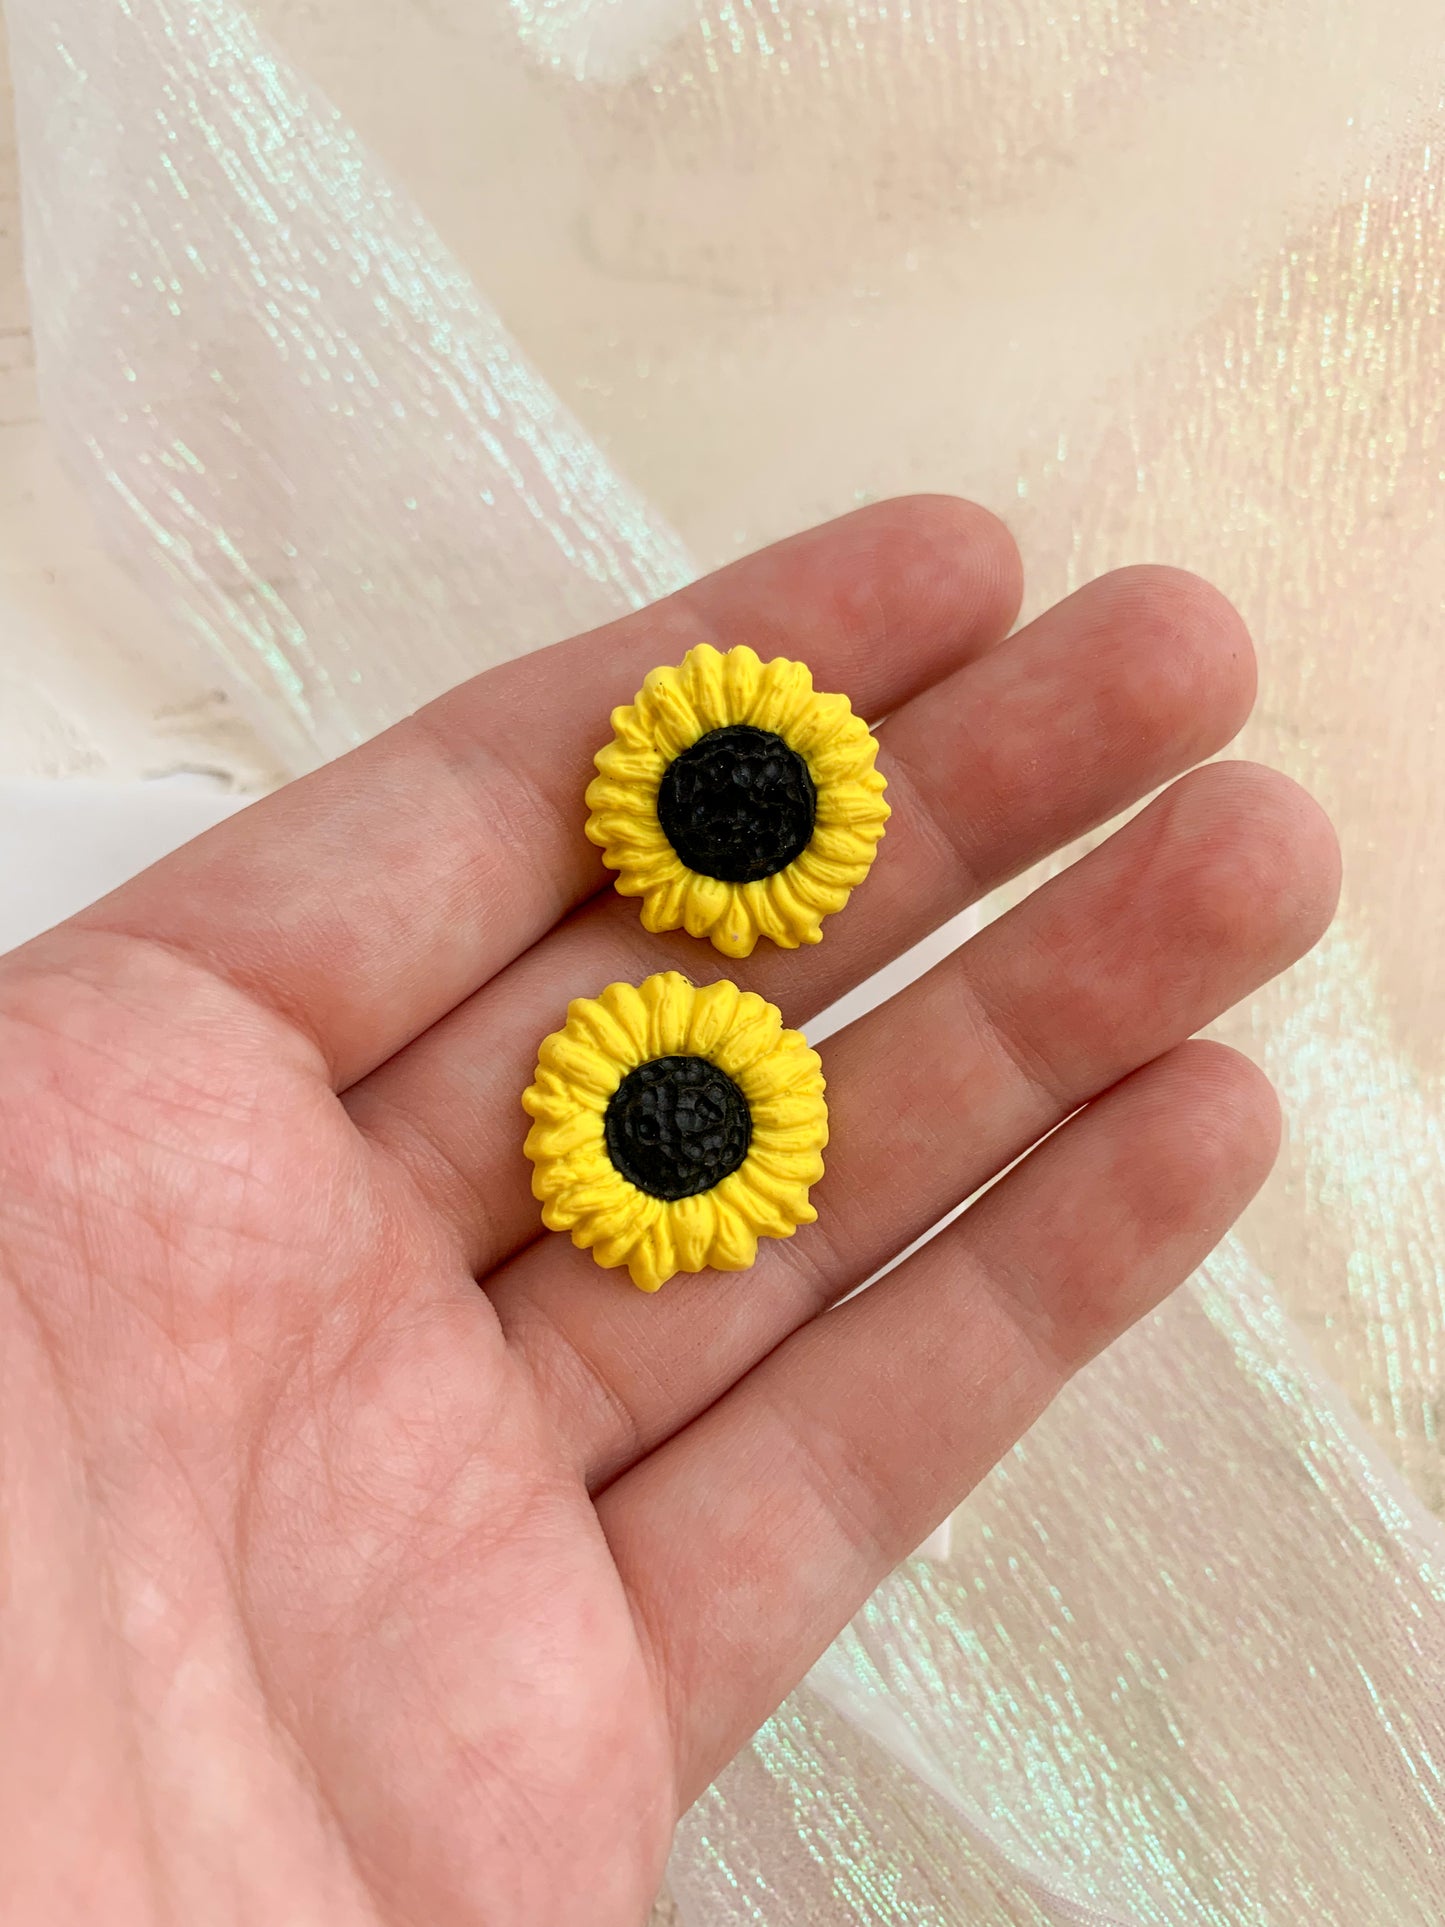 Sunflower Studs